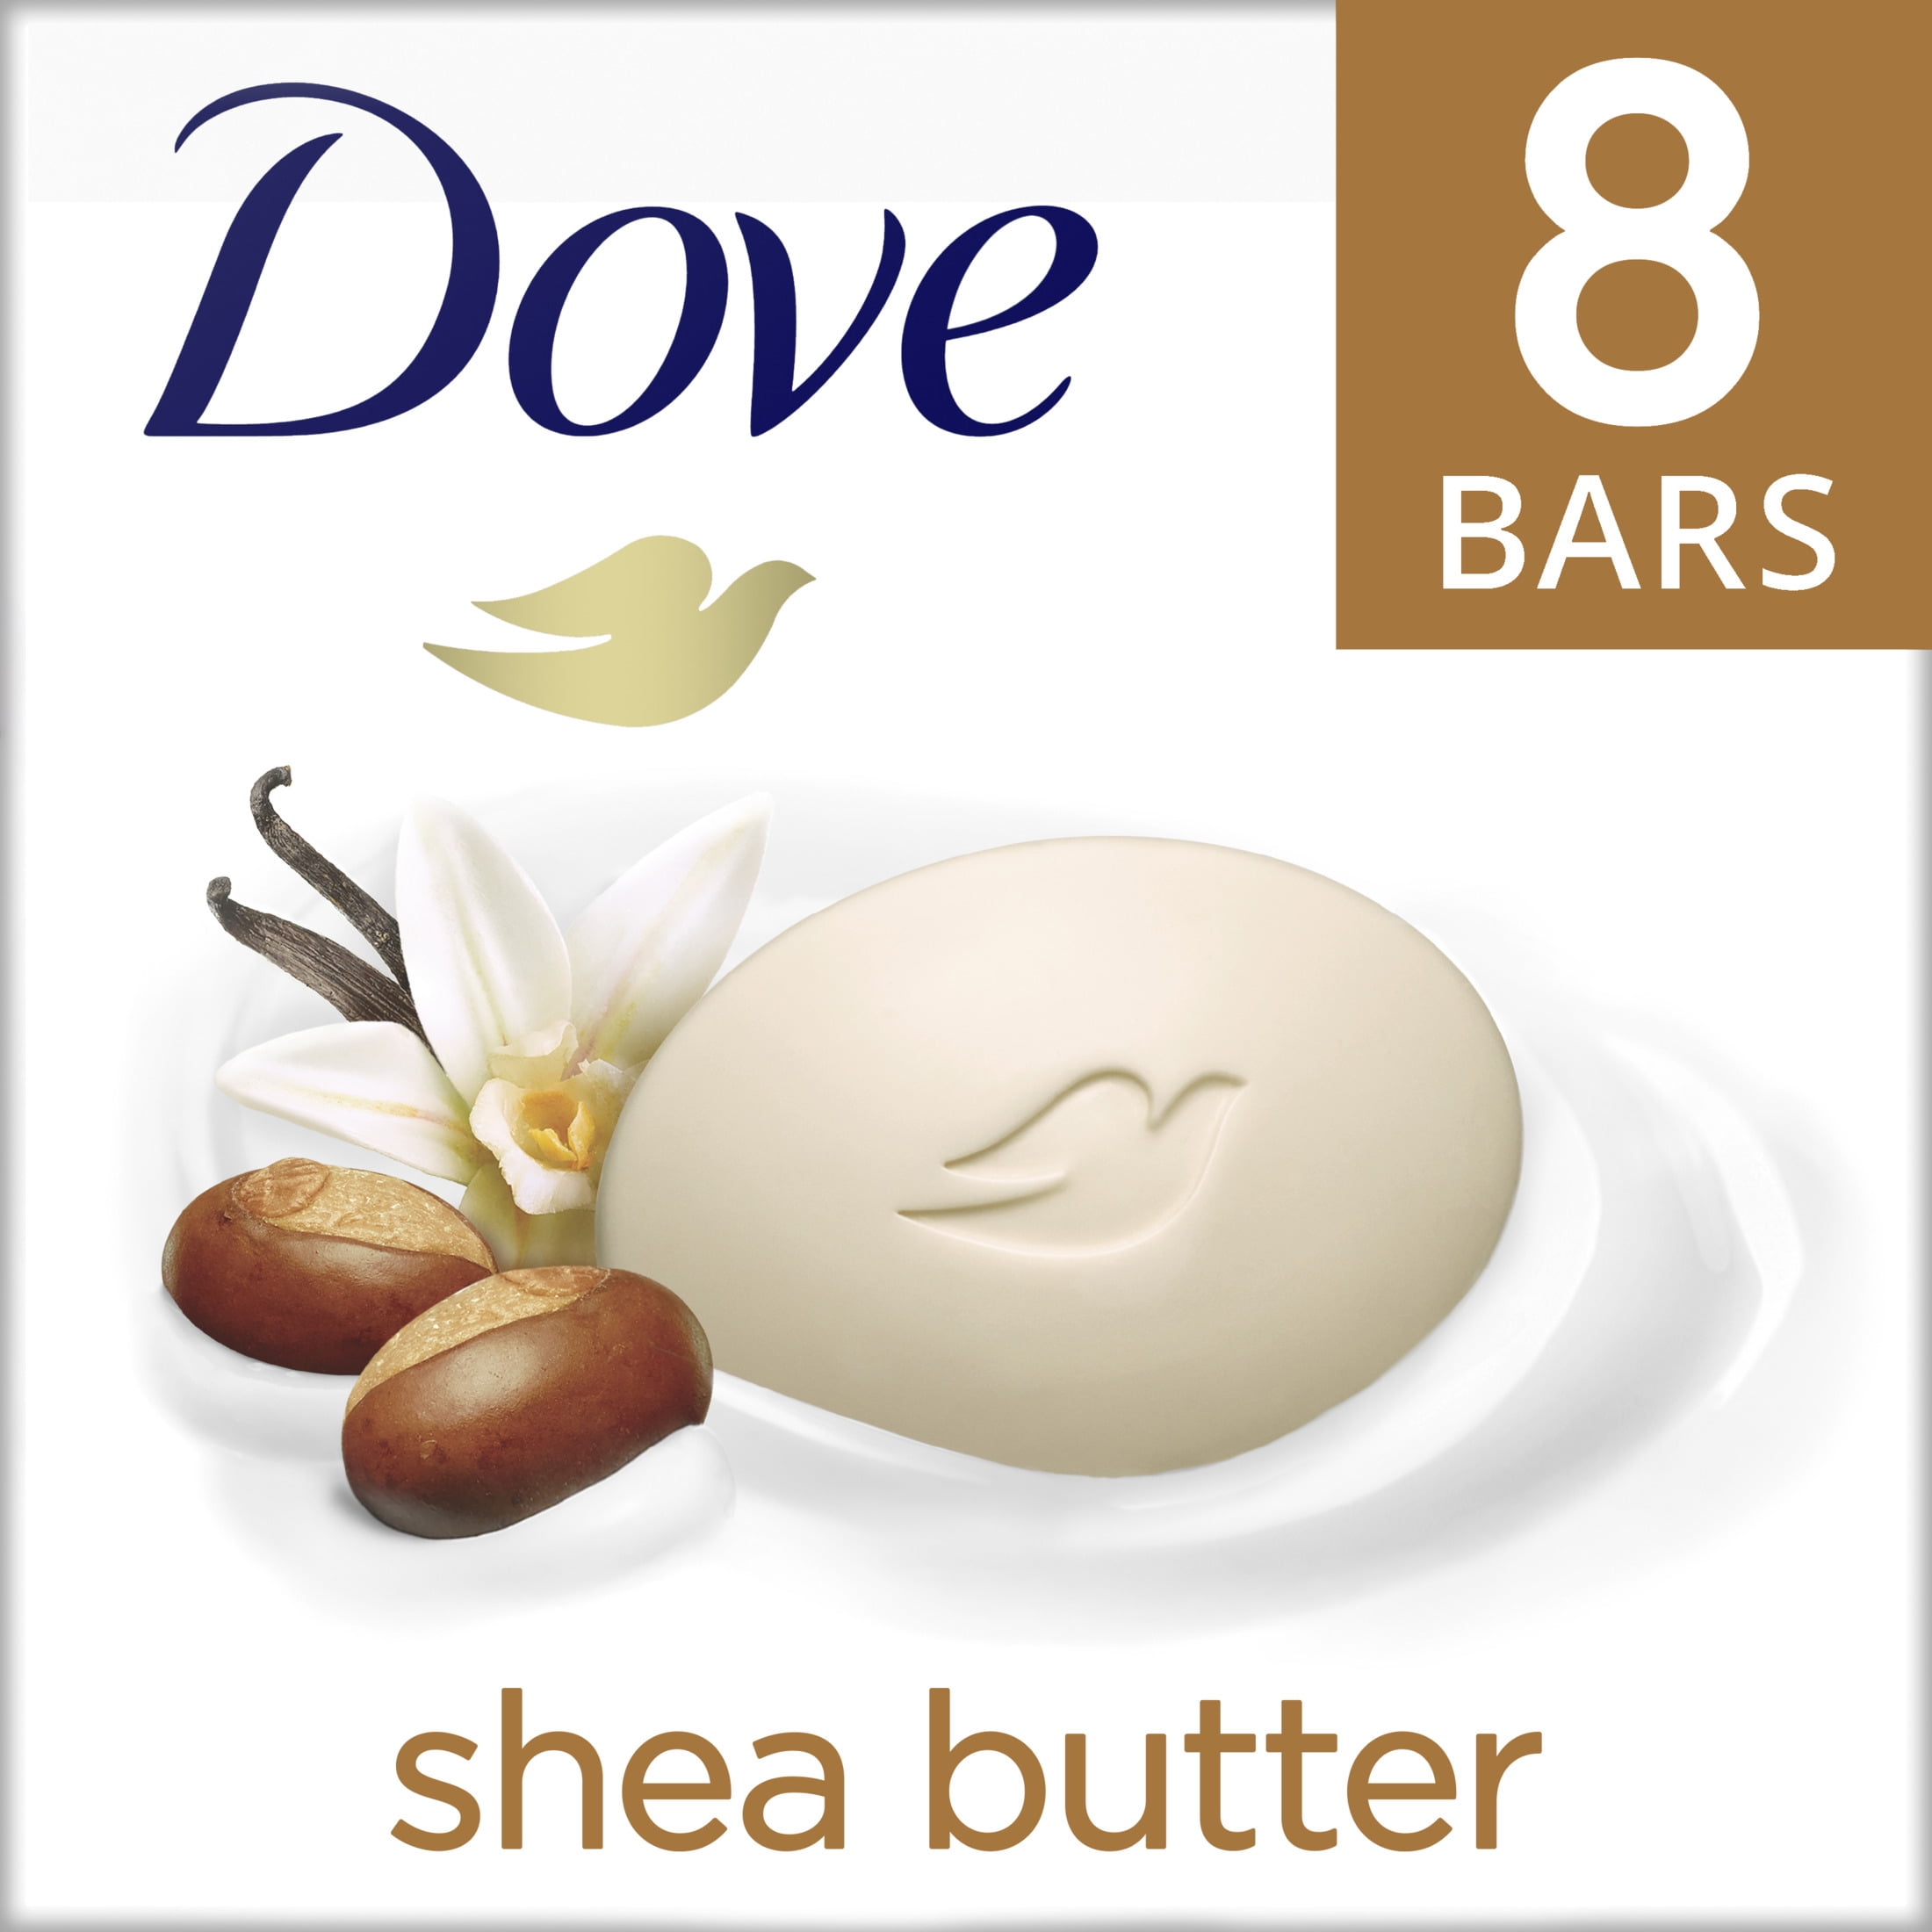 Dove Beauty Bar Gentle Skin Cleanser Shea Butter More Moisturizing Than Bar Soap Moisturizing for Gentle Soft Skin Care 3.75 oz, 8 Bars